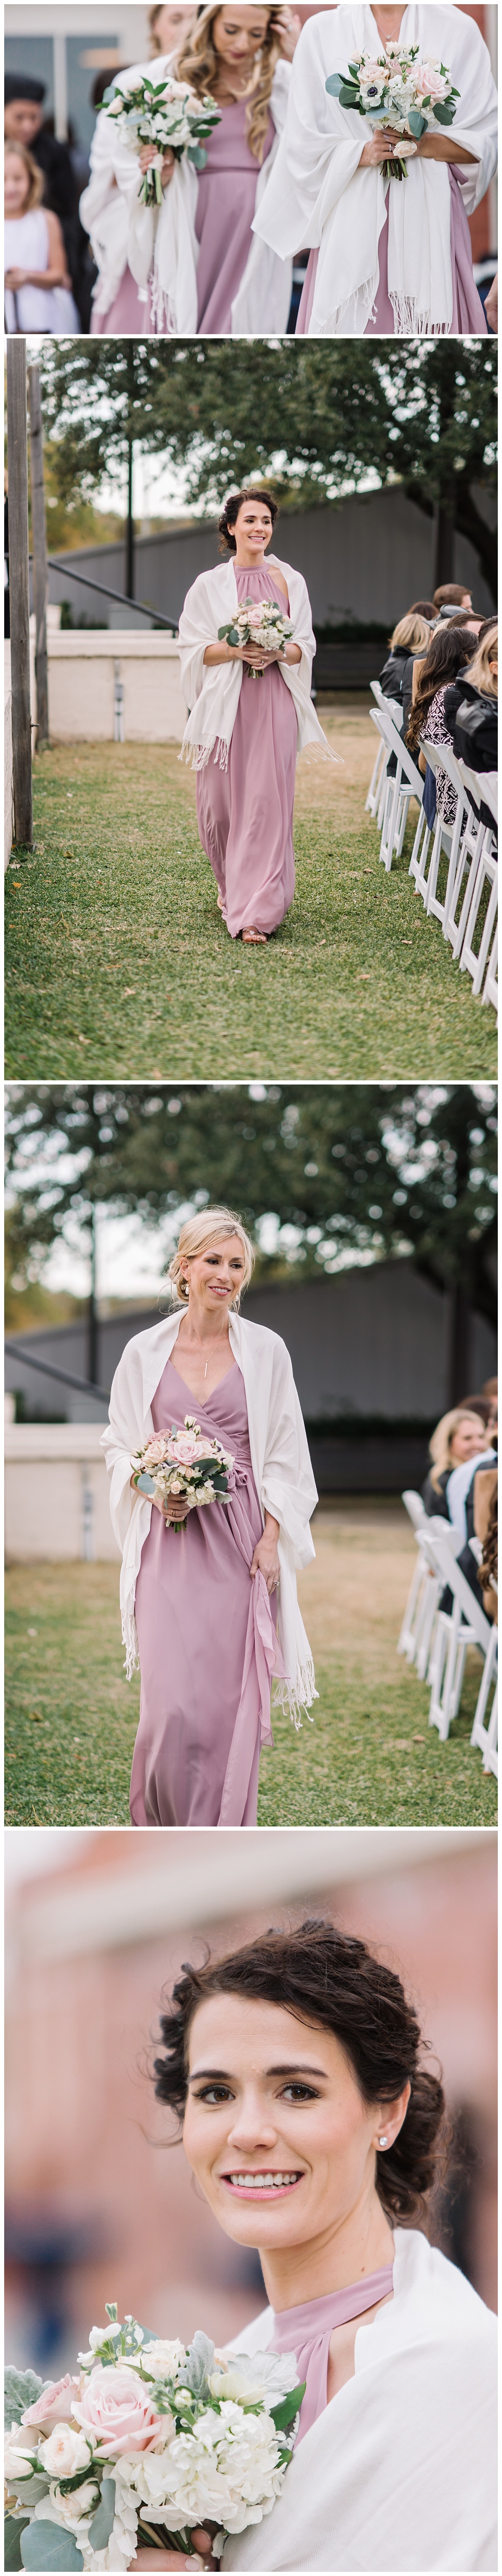 Dallas Filter Building,wedding flowers,outdoor ceremony,hydrangeas,bouquets,dallas wedding,fall wedding, indoor reception, traditional wedding flowers